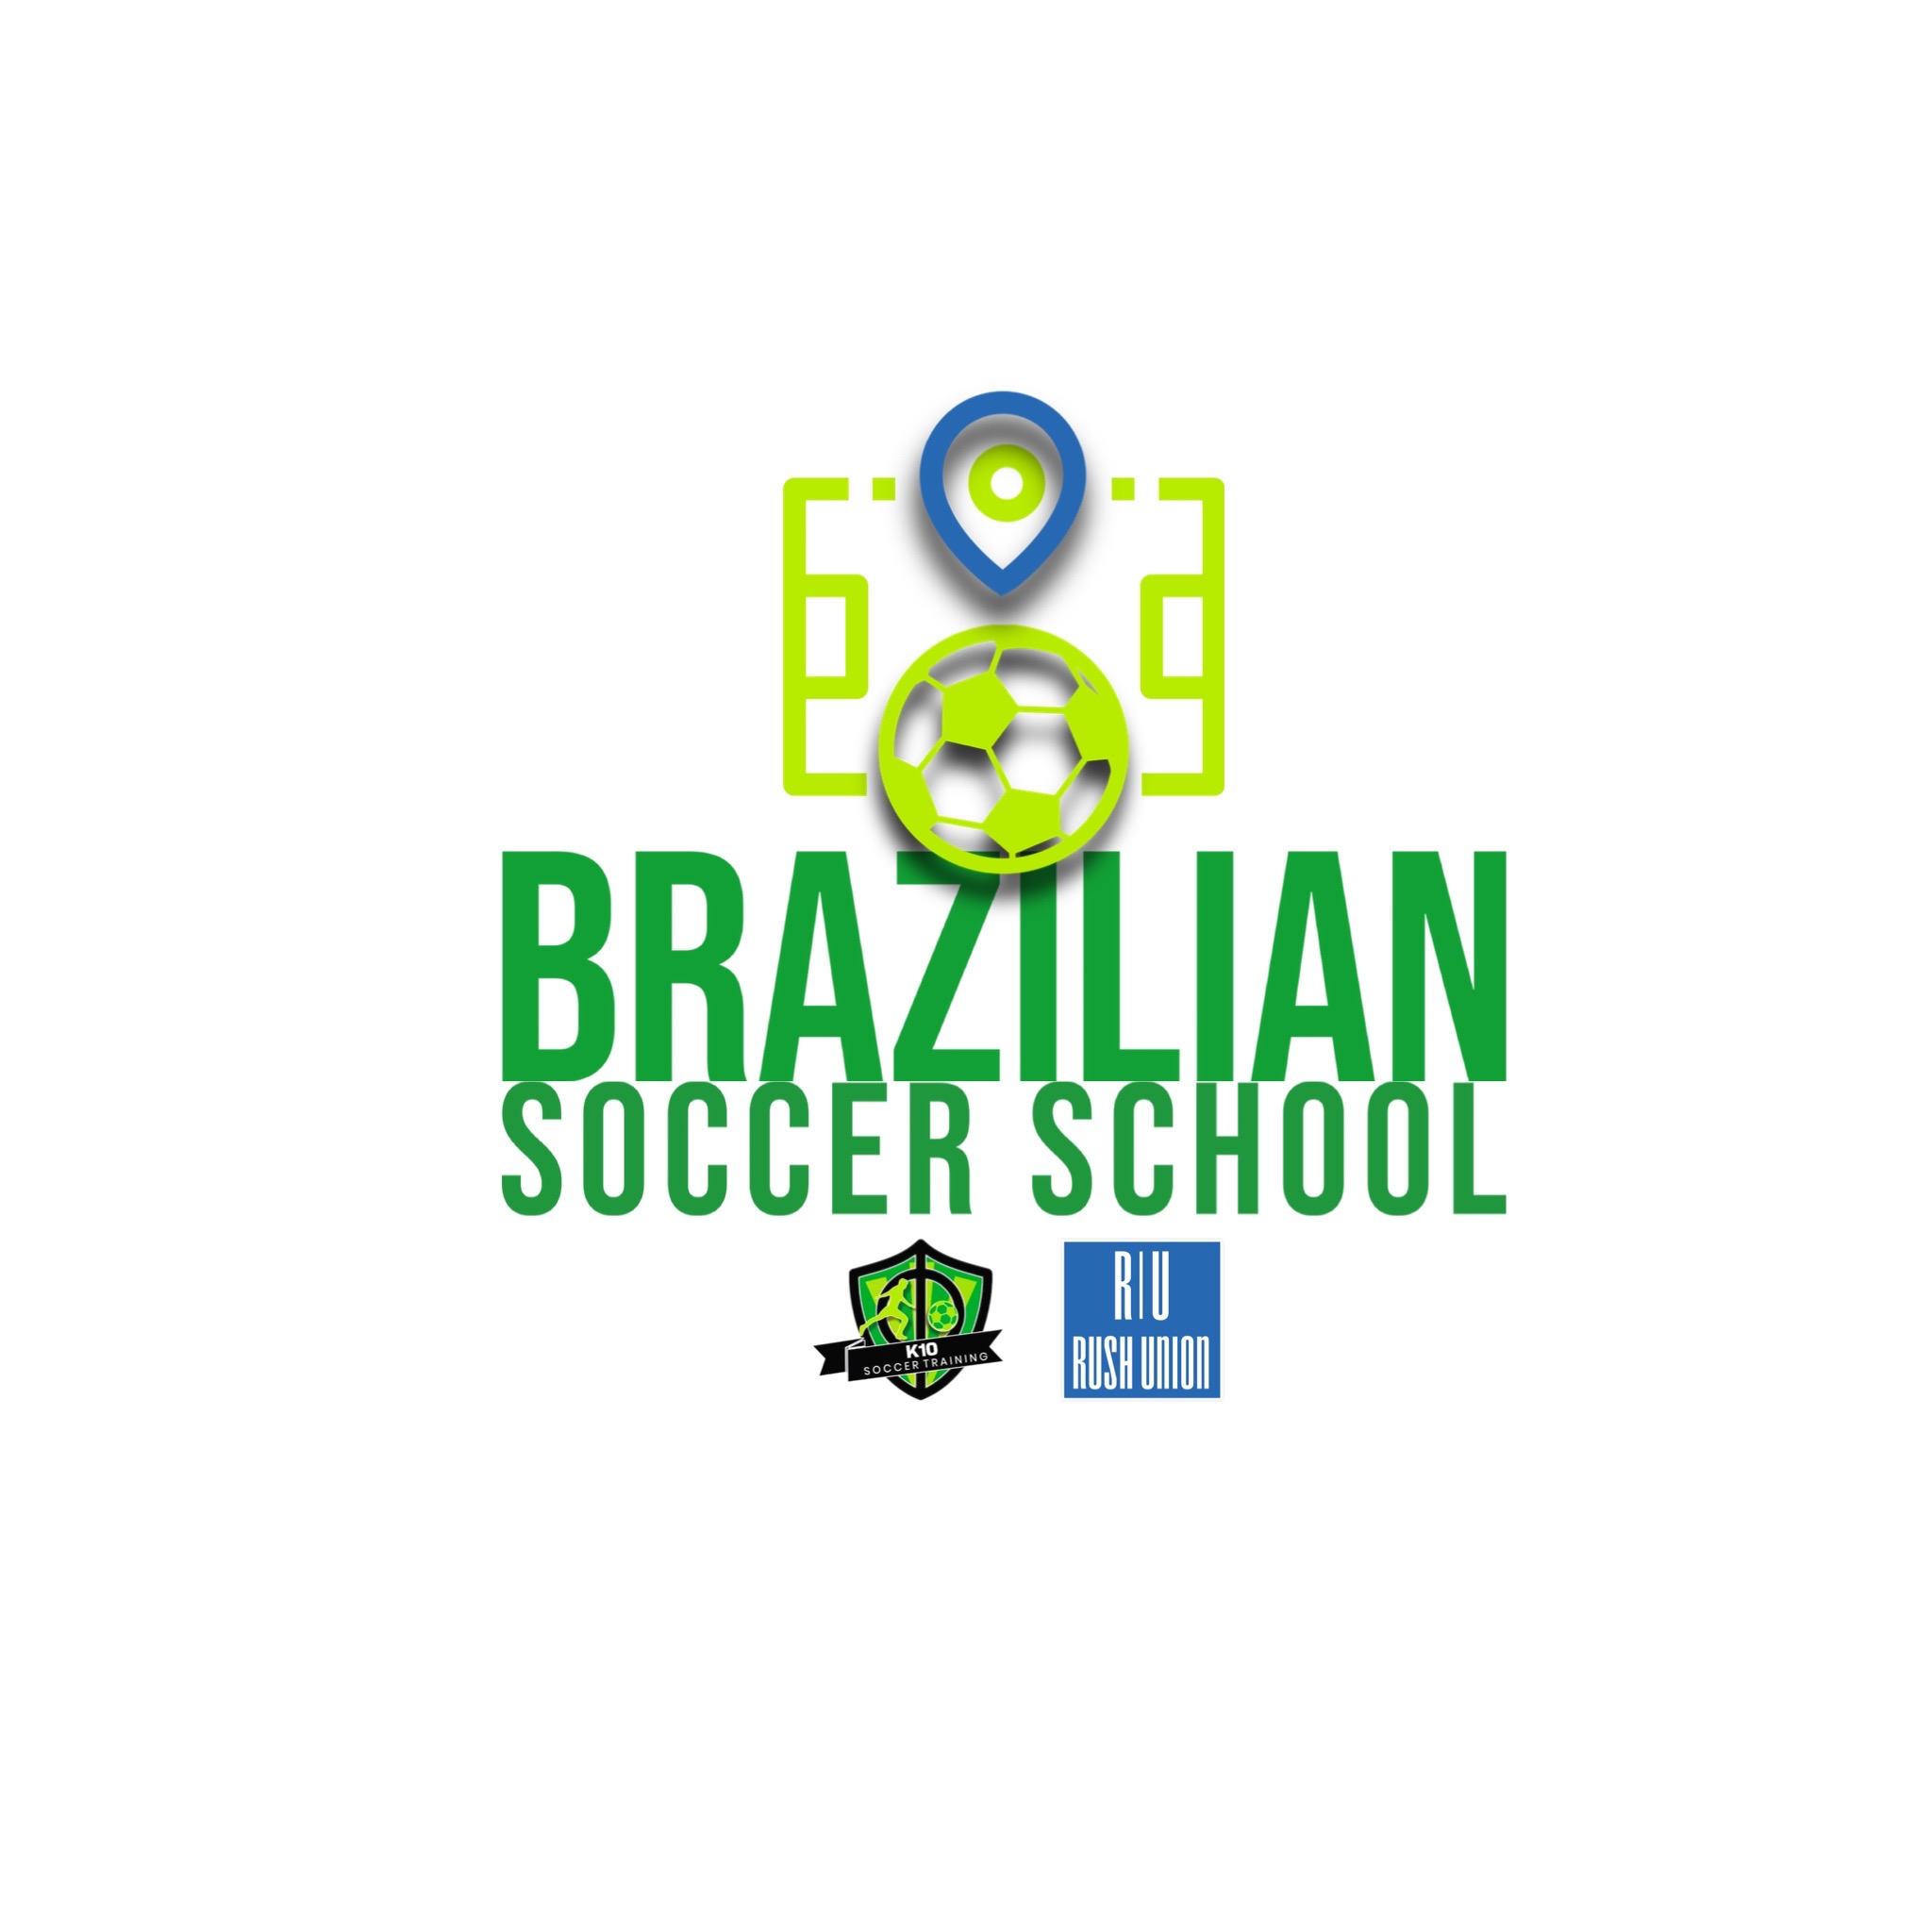 COMING SOON - BRAZILIAN SOCCER SCHOOL